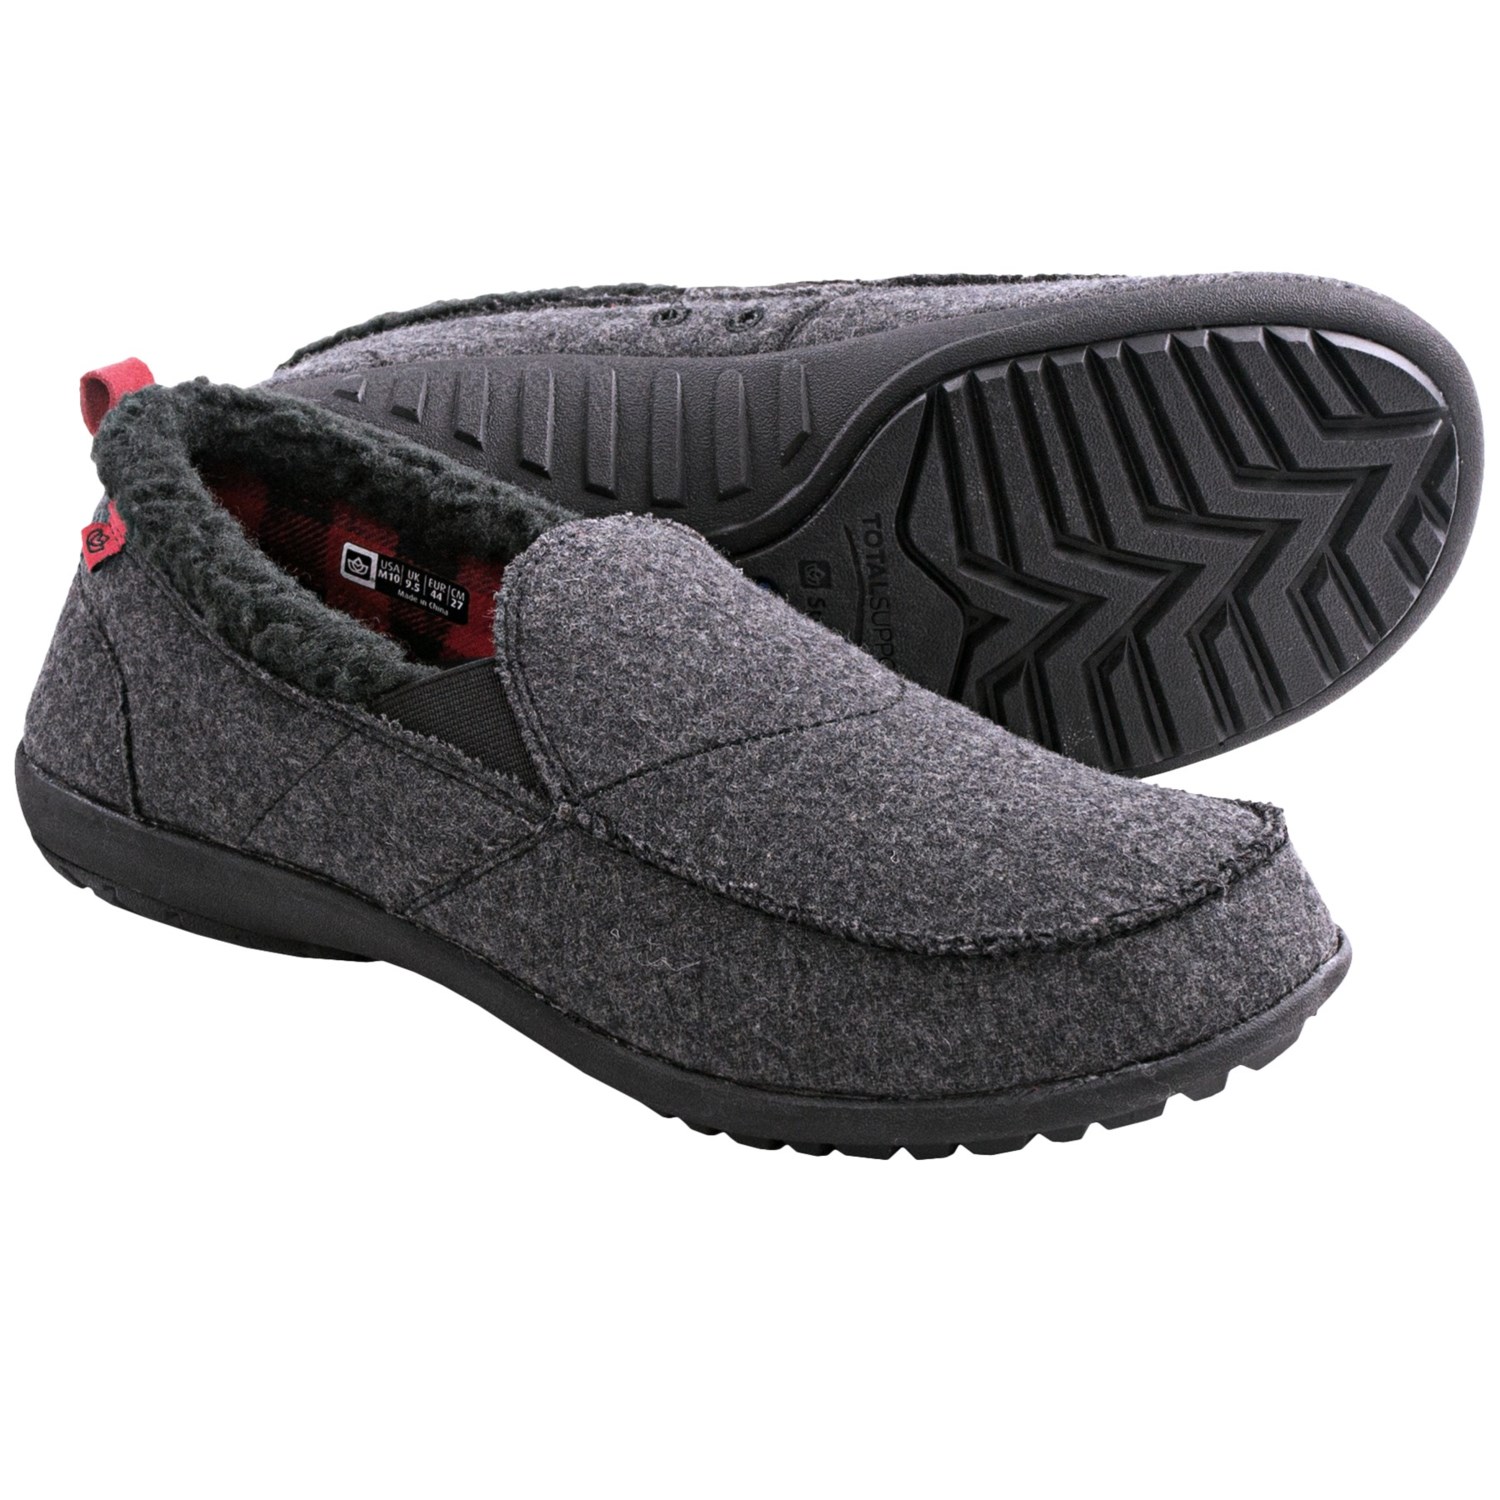 Spenco Siesta Cold Snap Shoes (For Men) 7520V Save 56